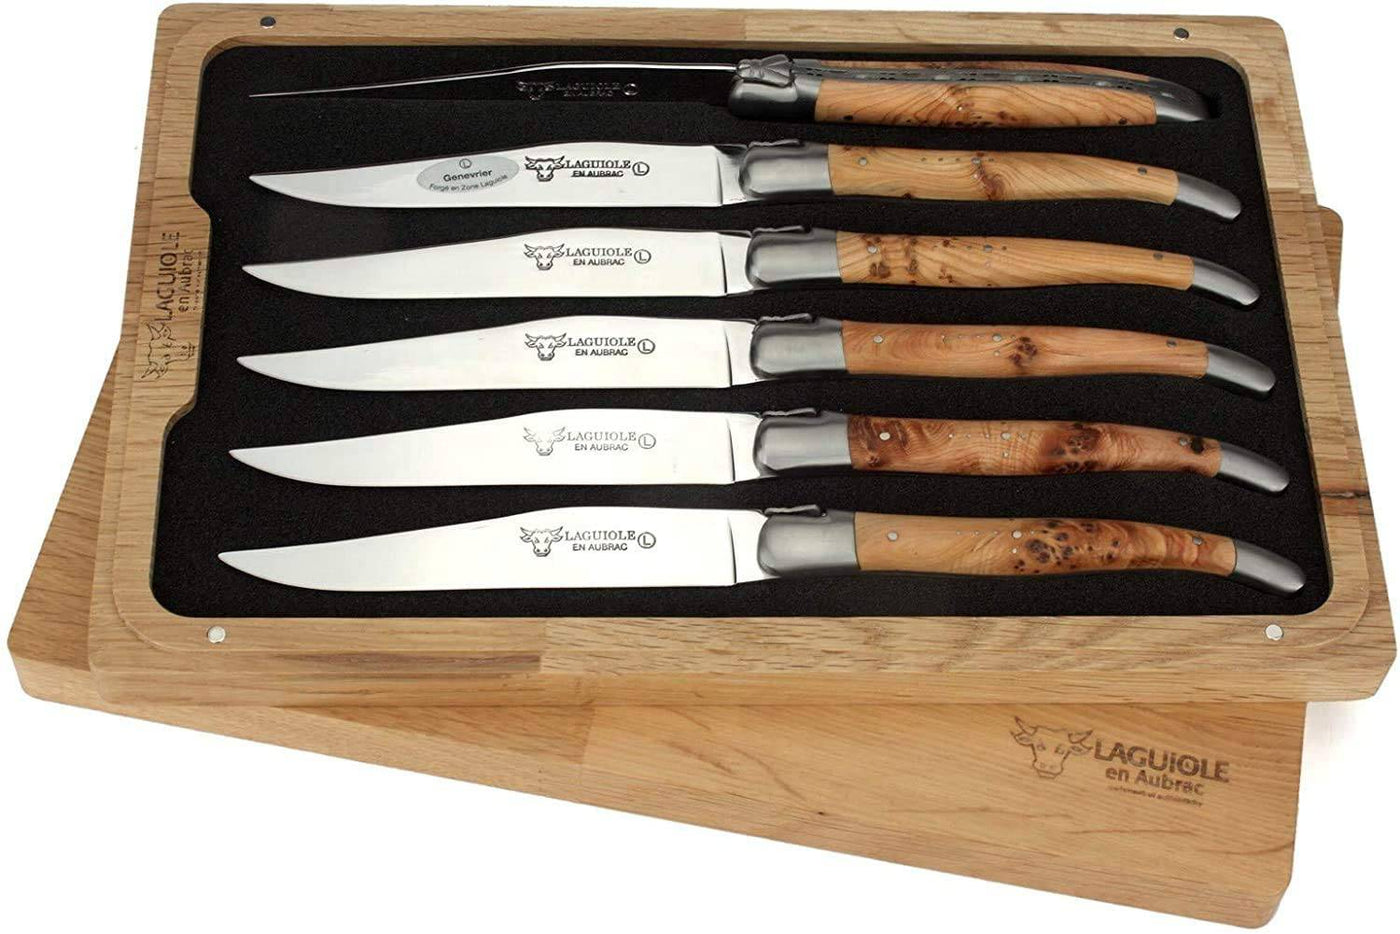 Laguiole en Aubrac Luxury Stainless Steel 6-Piece Steak Knife Set With Juniper Wood Handles - Kitchen Universe